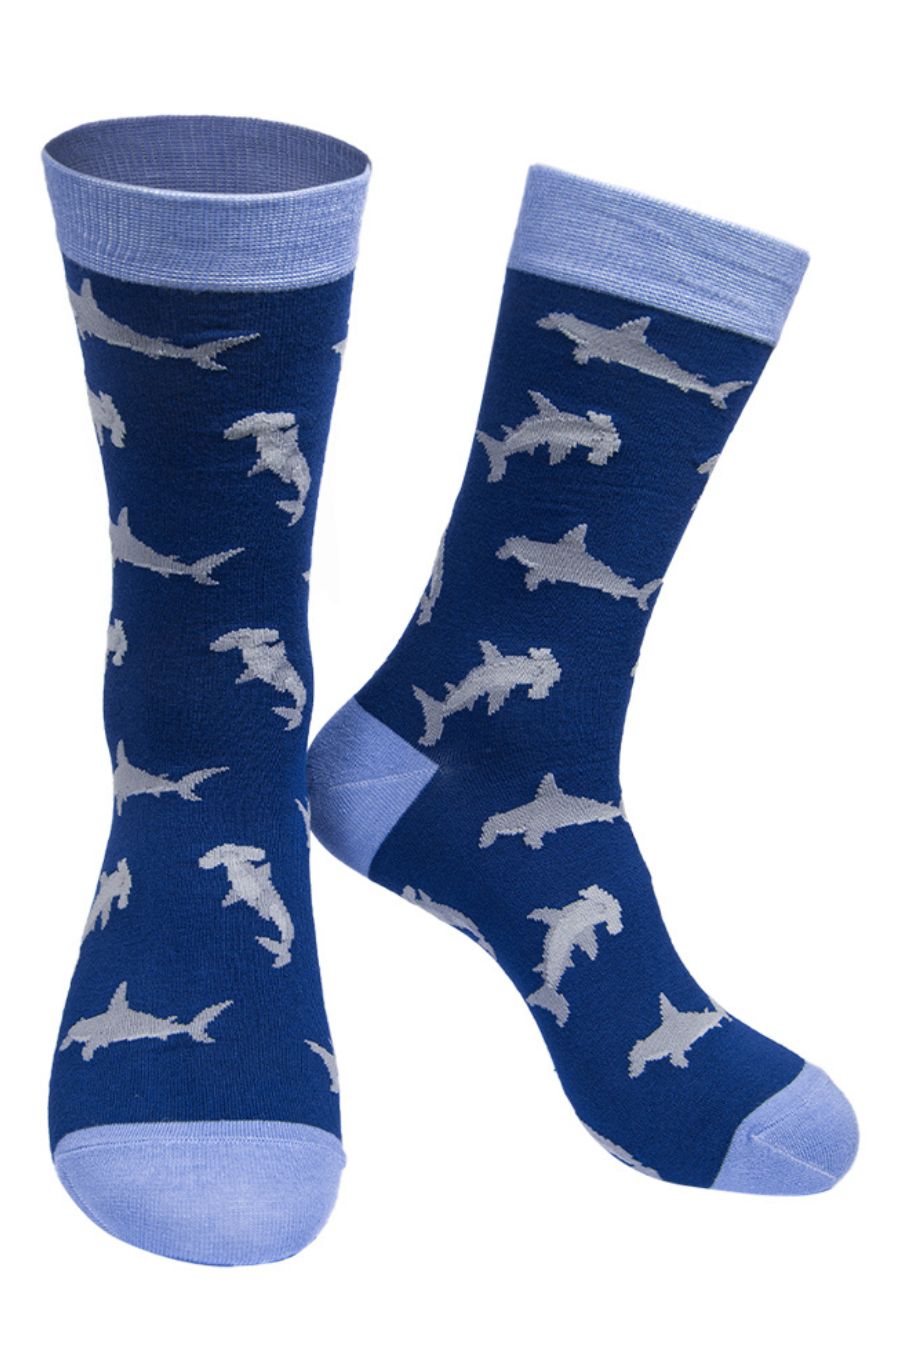 blue dress socks with an all over grey hammerhead shark patttern 